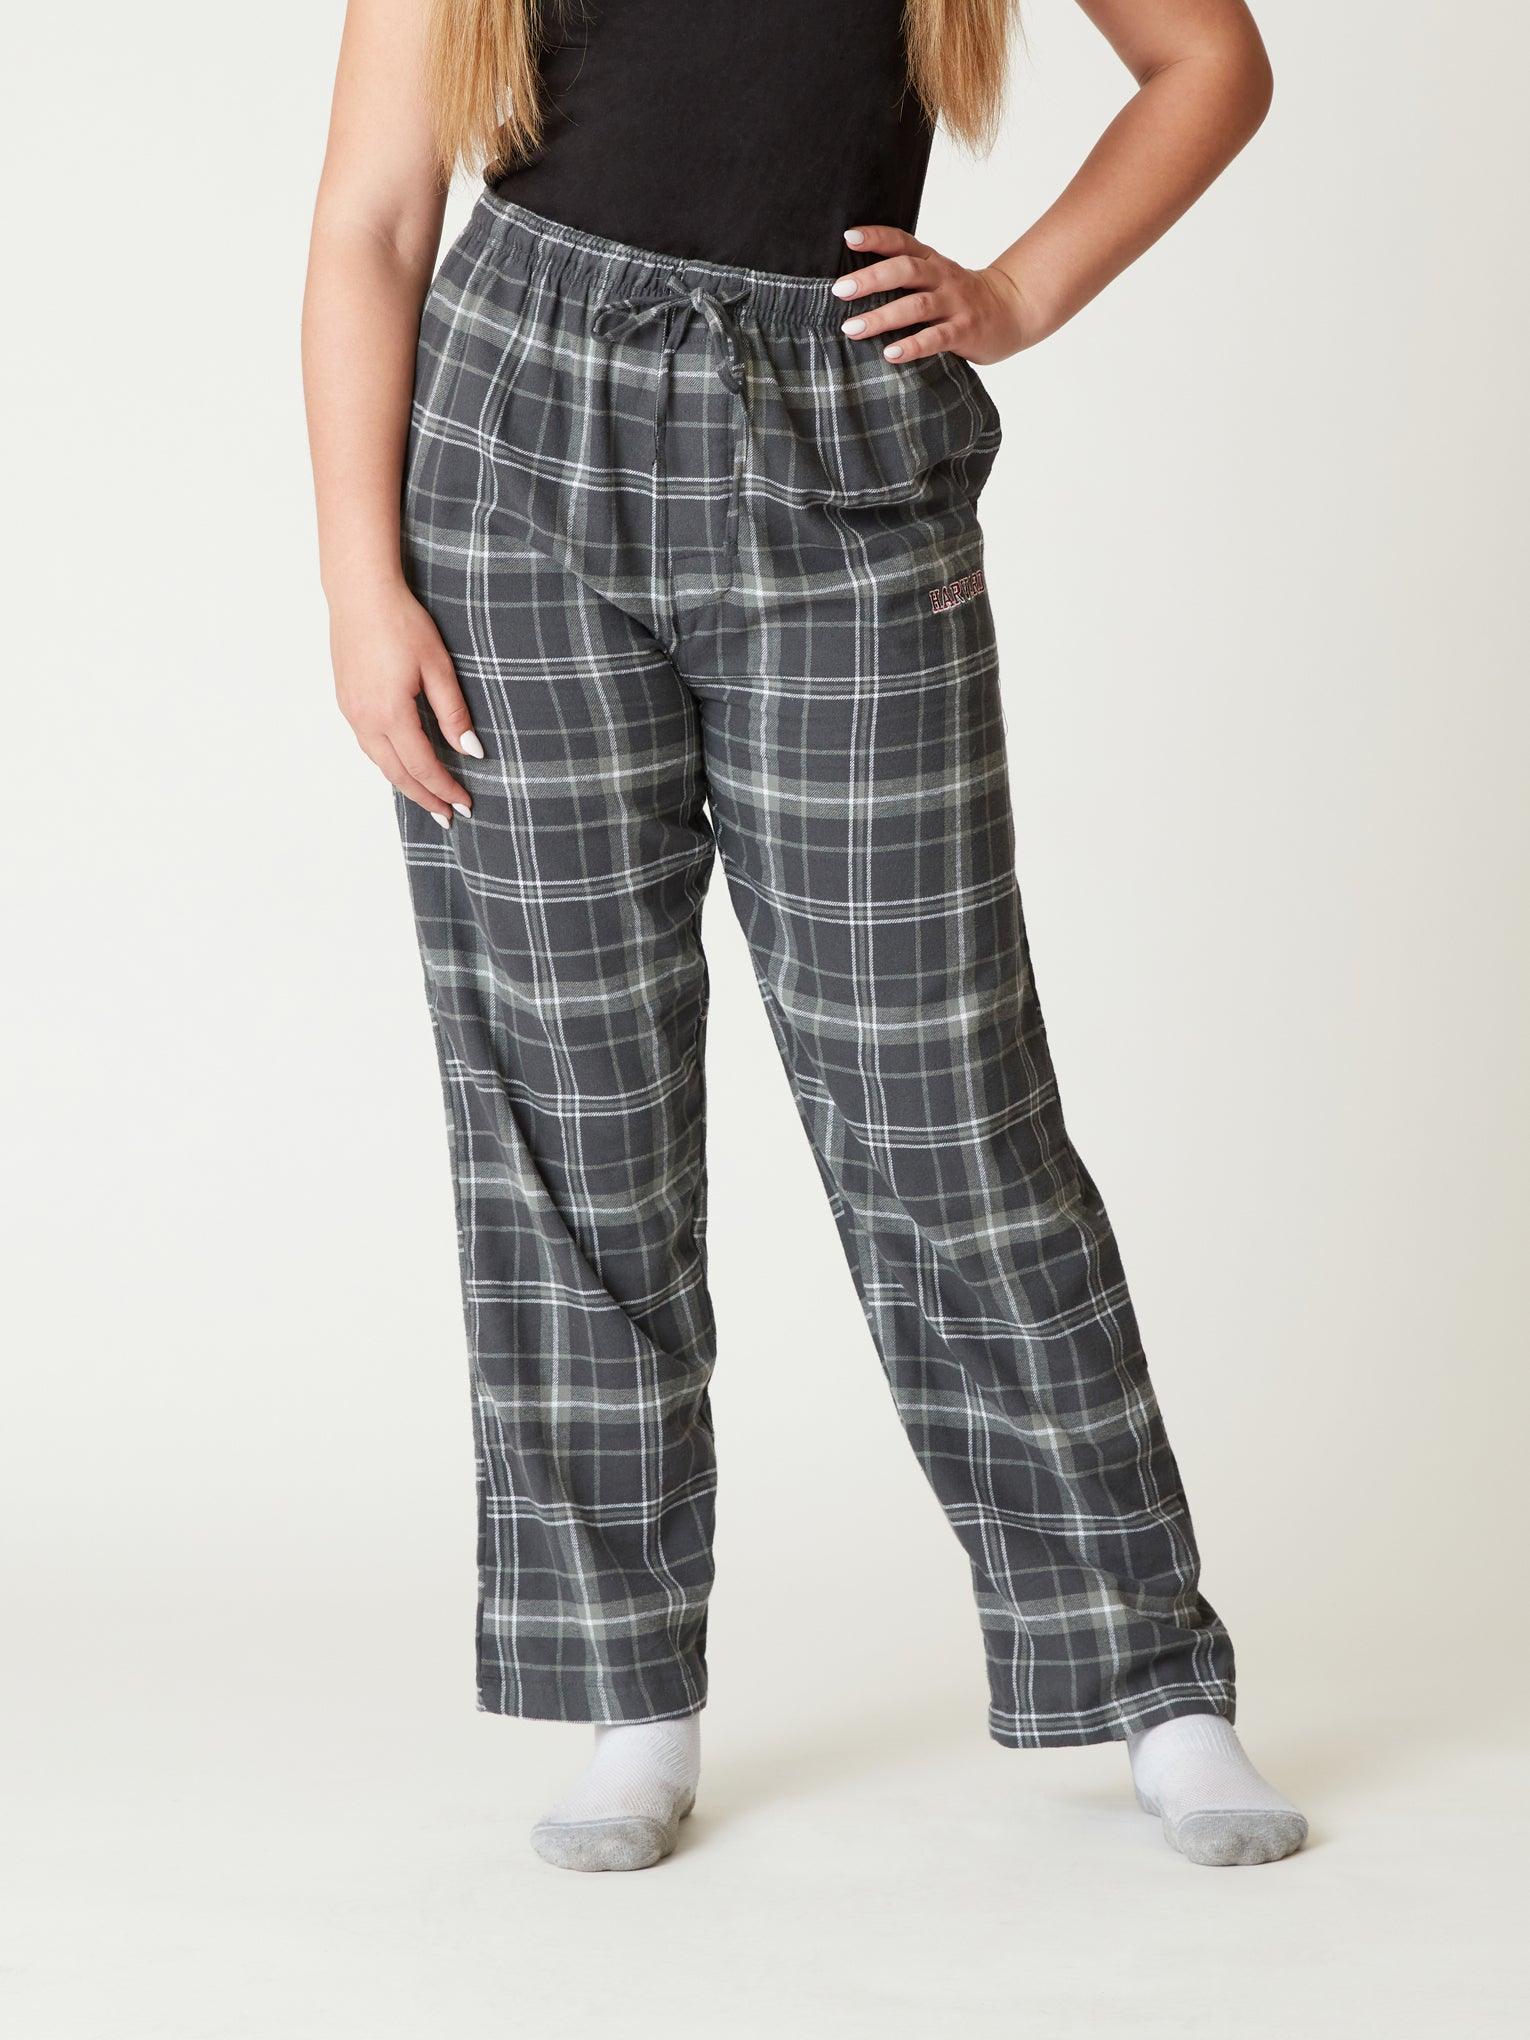 Buy Plaid Pajama Pants Online In India -  India